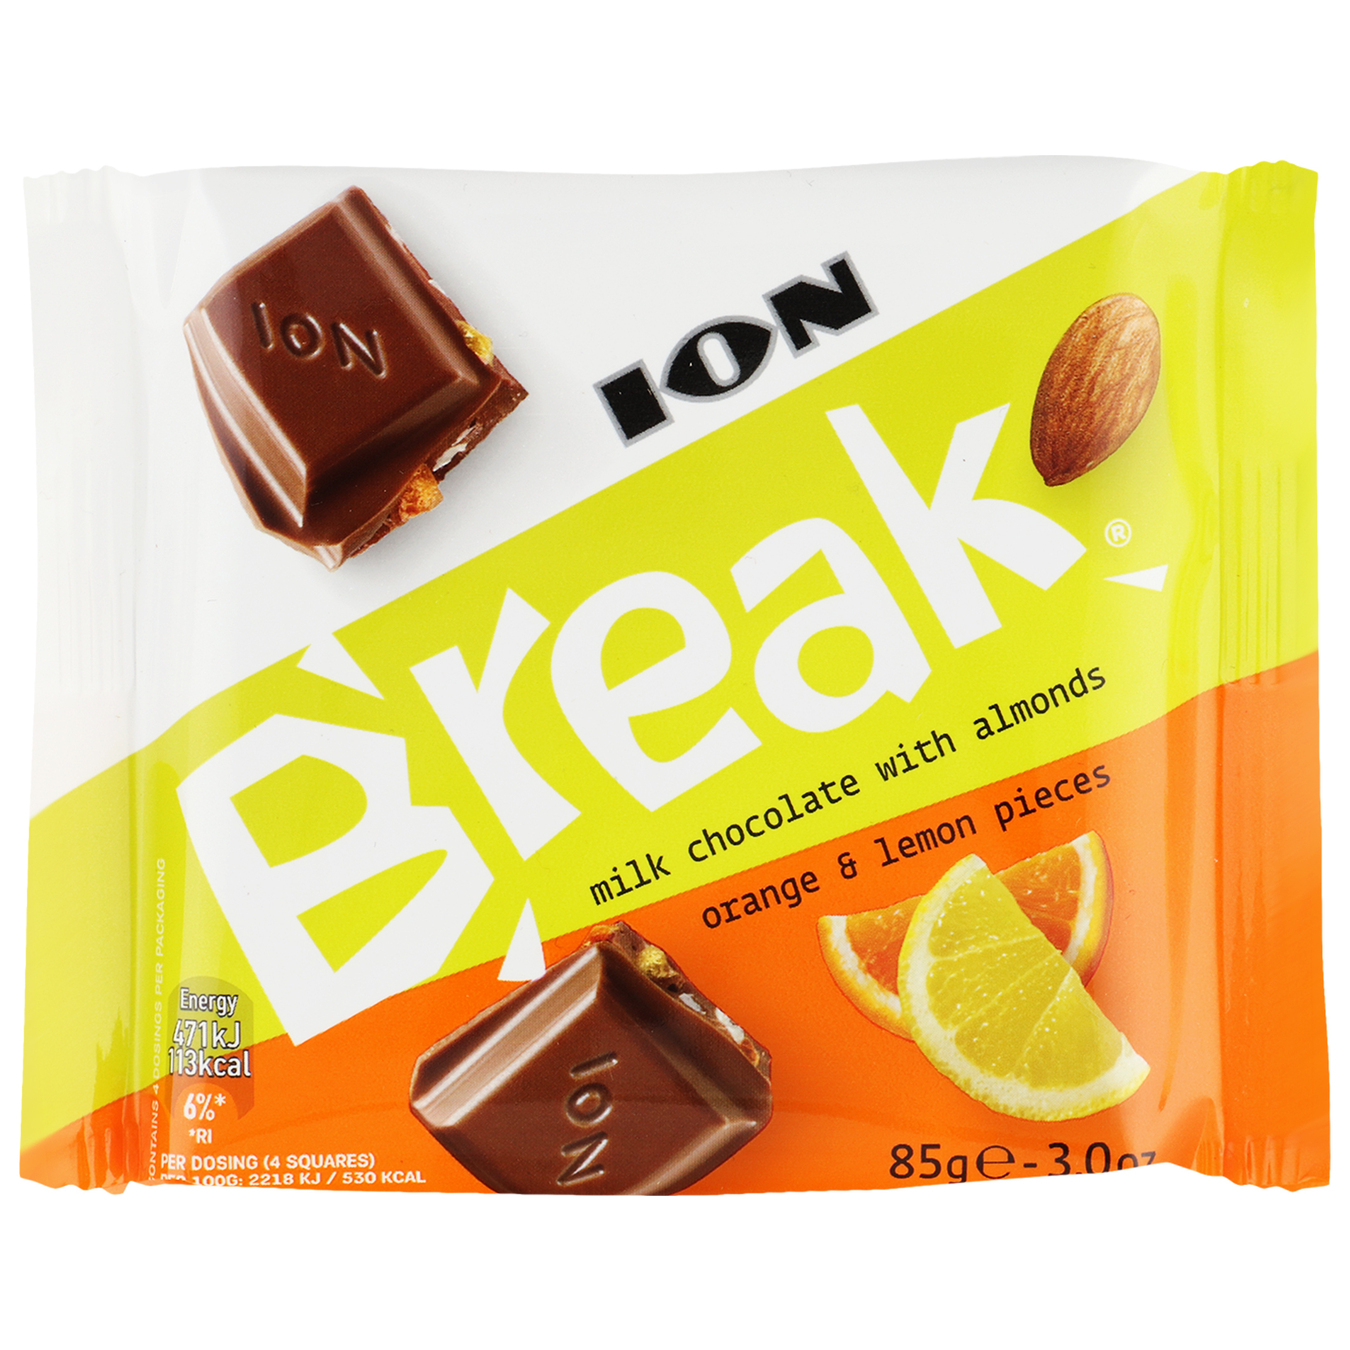 ION Break Milk Chocolate Bar with Slices of Orange Lemon and